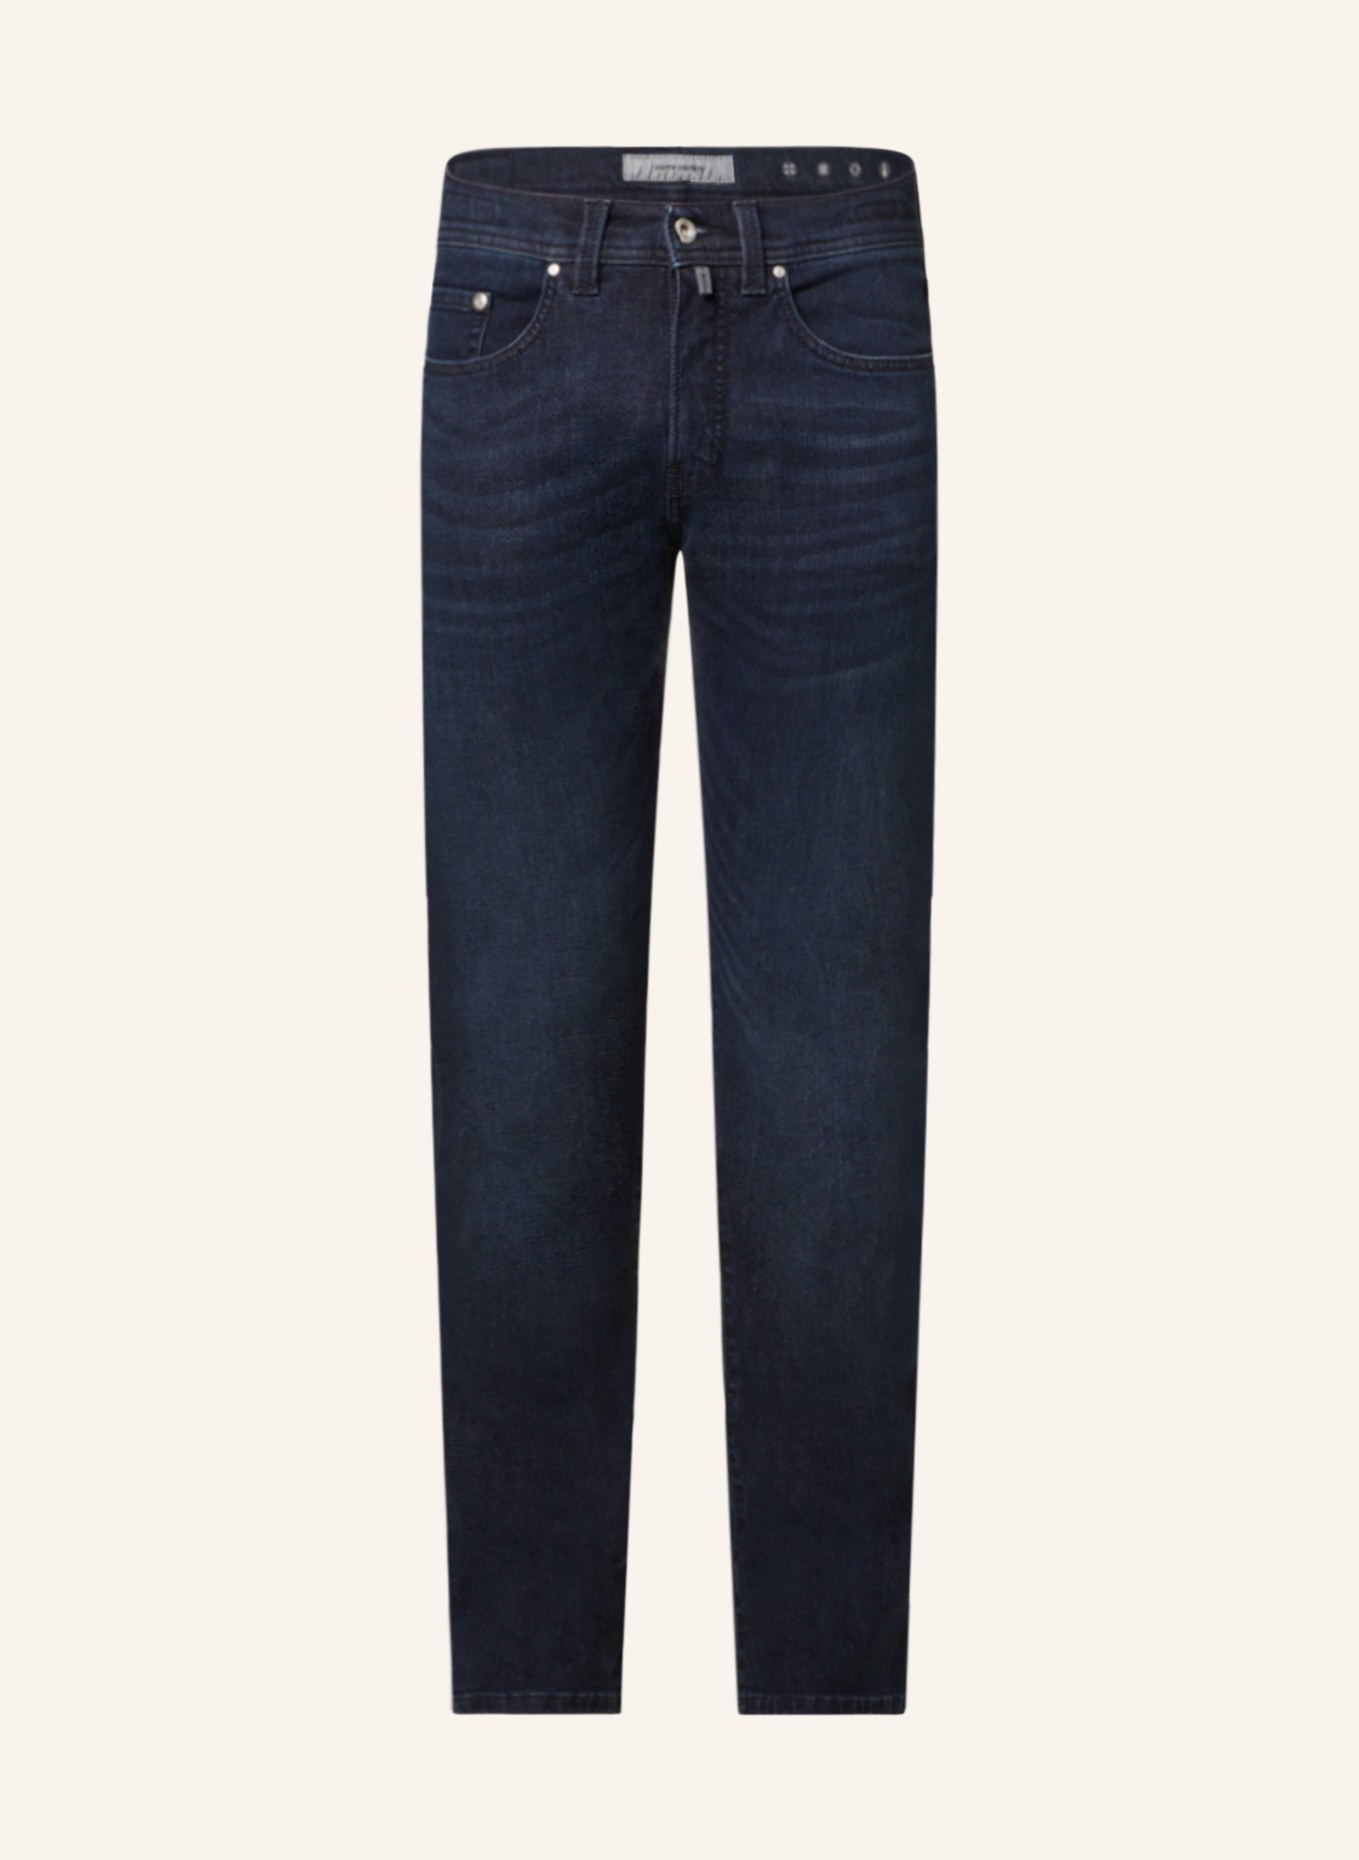 pierre cardin Jeans LYON Tapered Fit, Farbe: 6814 dark blue used buffies (Bild 1)